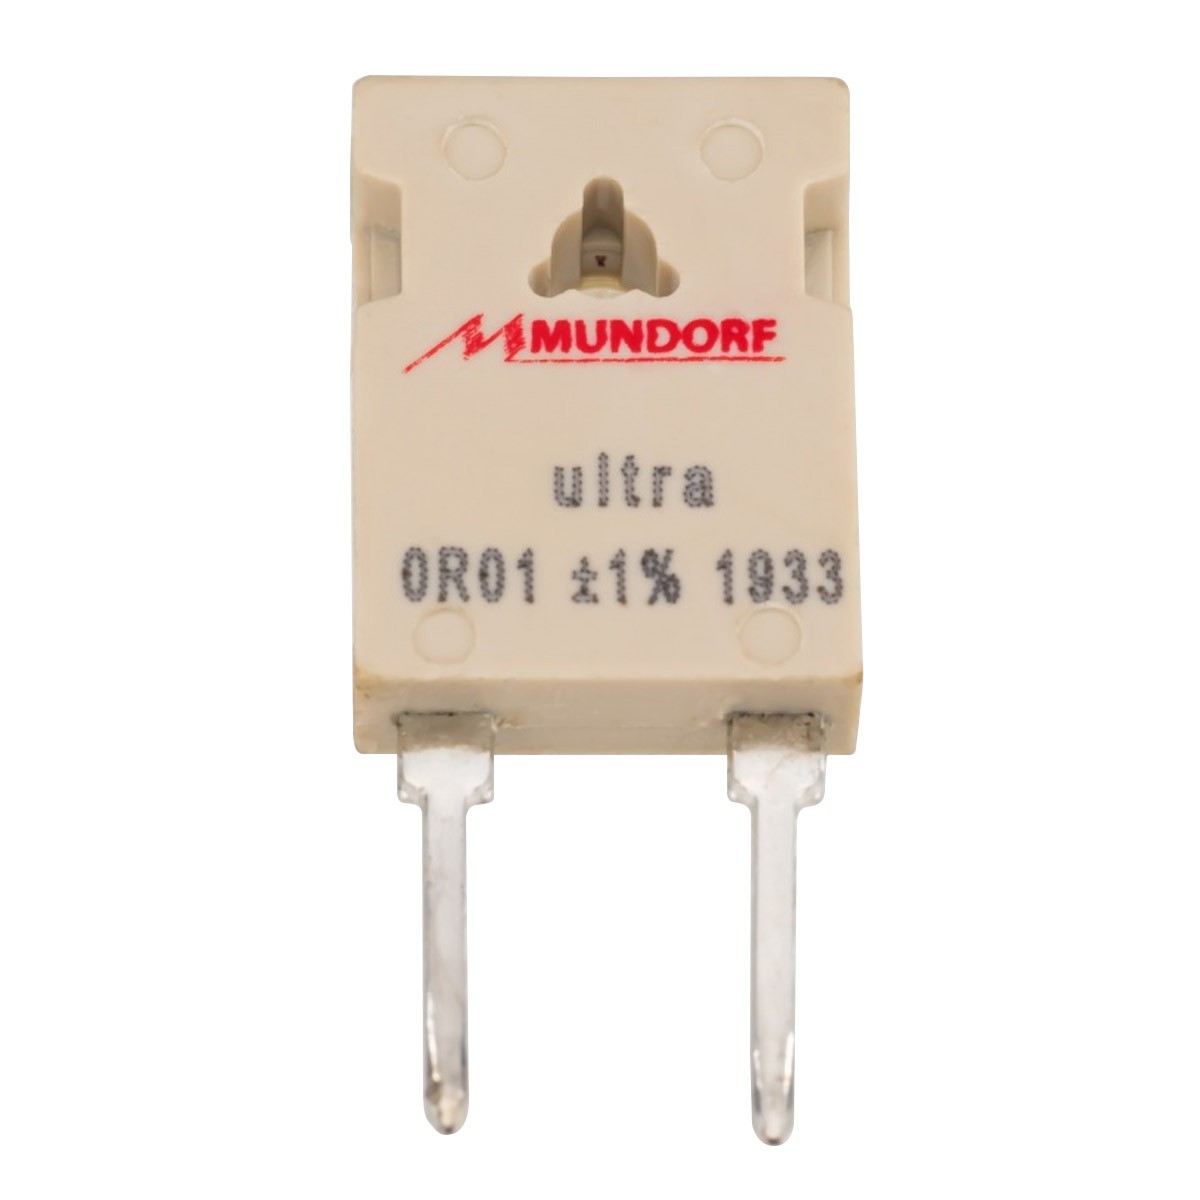 MUNDORF MRESIST ULTRA Resistor 30W 22 Ohm